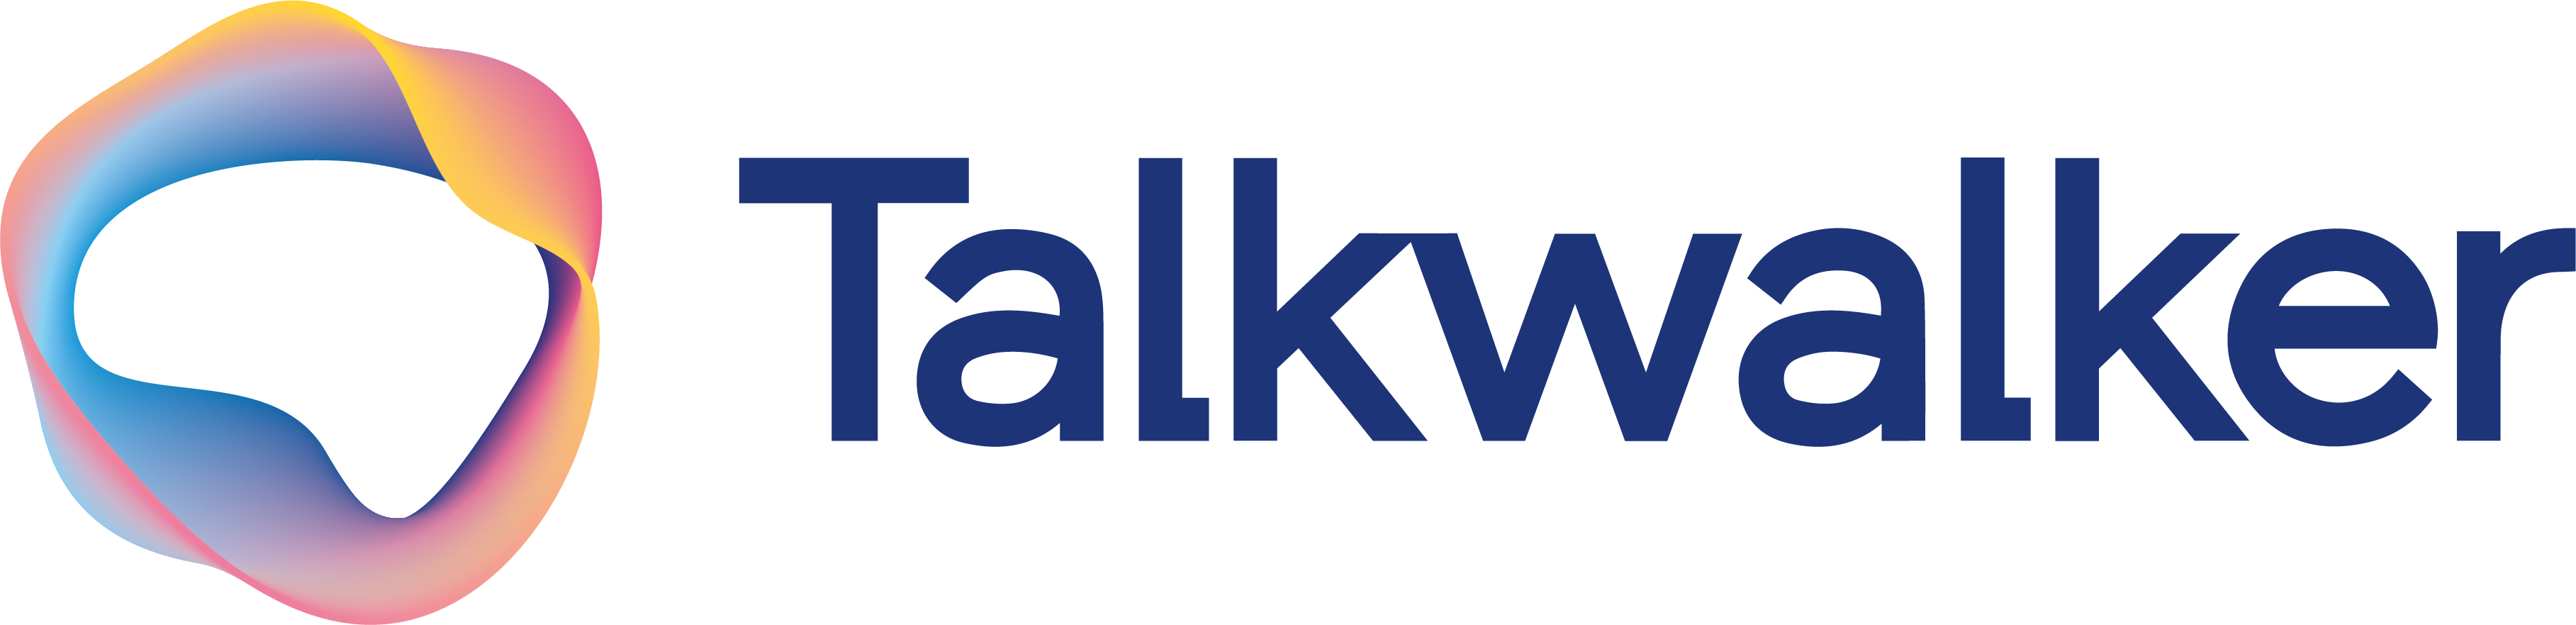 Talkwalker Logo Full Blue